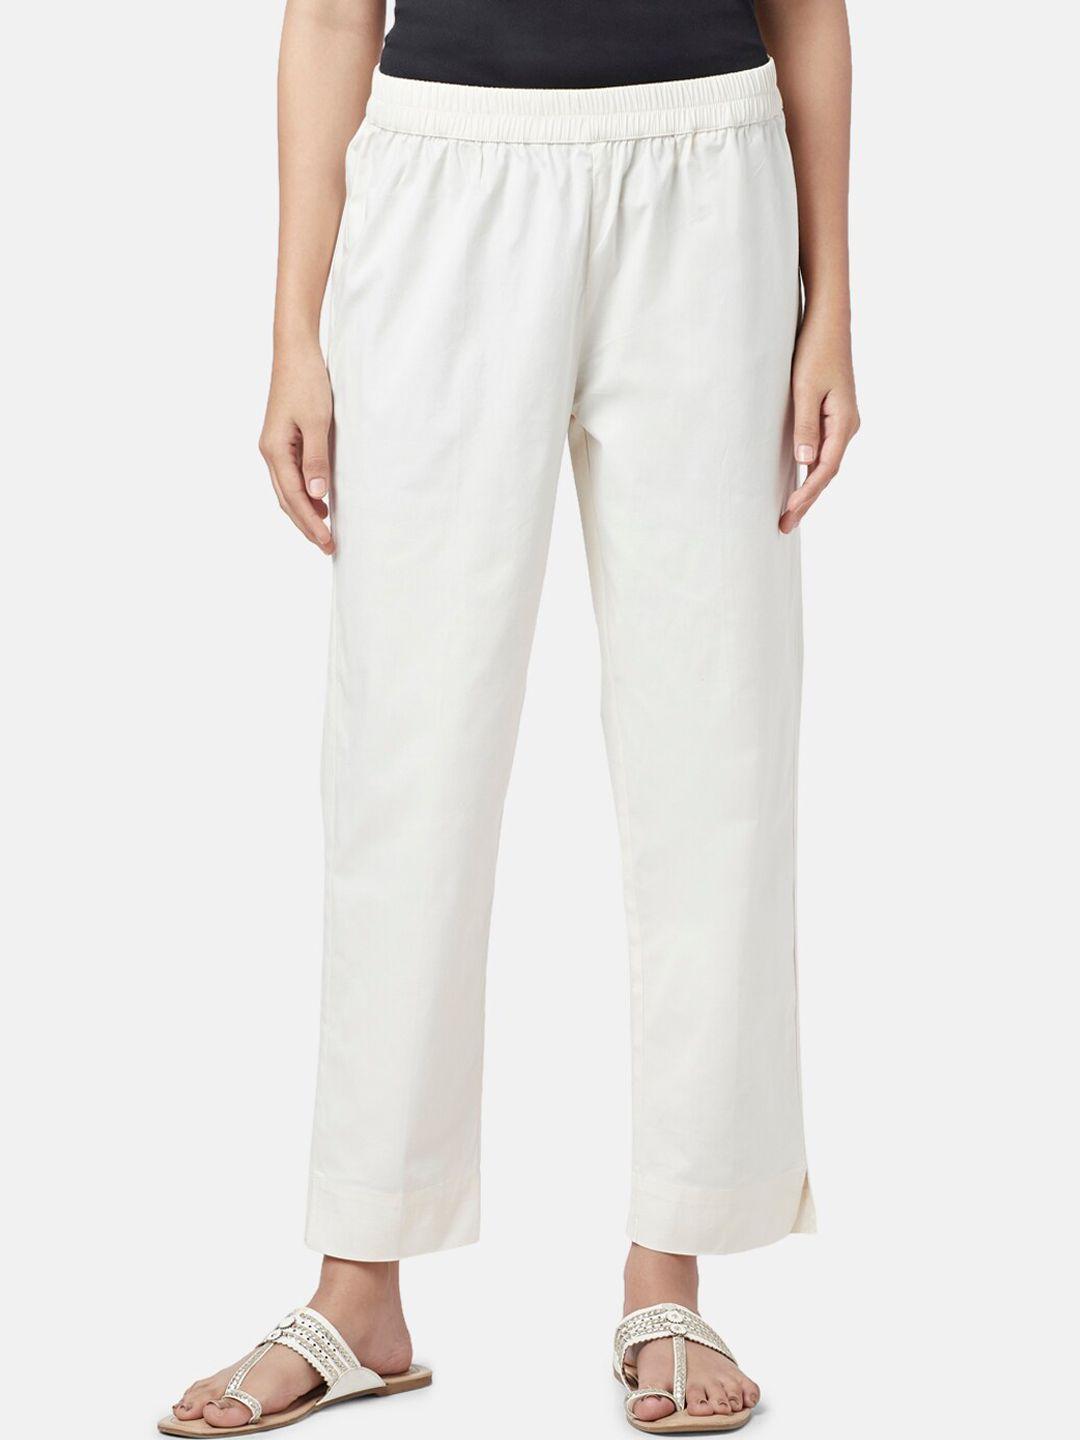 rangmanch-by-pantaloons-women-mid-rise-cotton-trousers